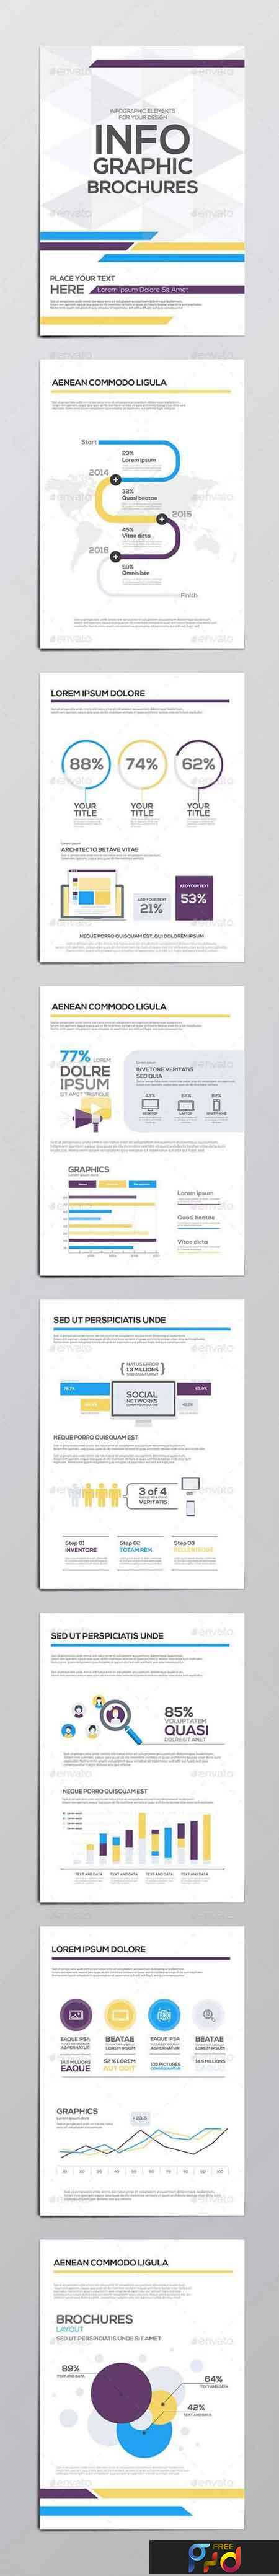 freepsdvn-com_1480072133_infographics-elements-for-corporate-brochures-13079507